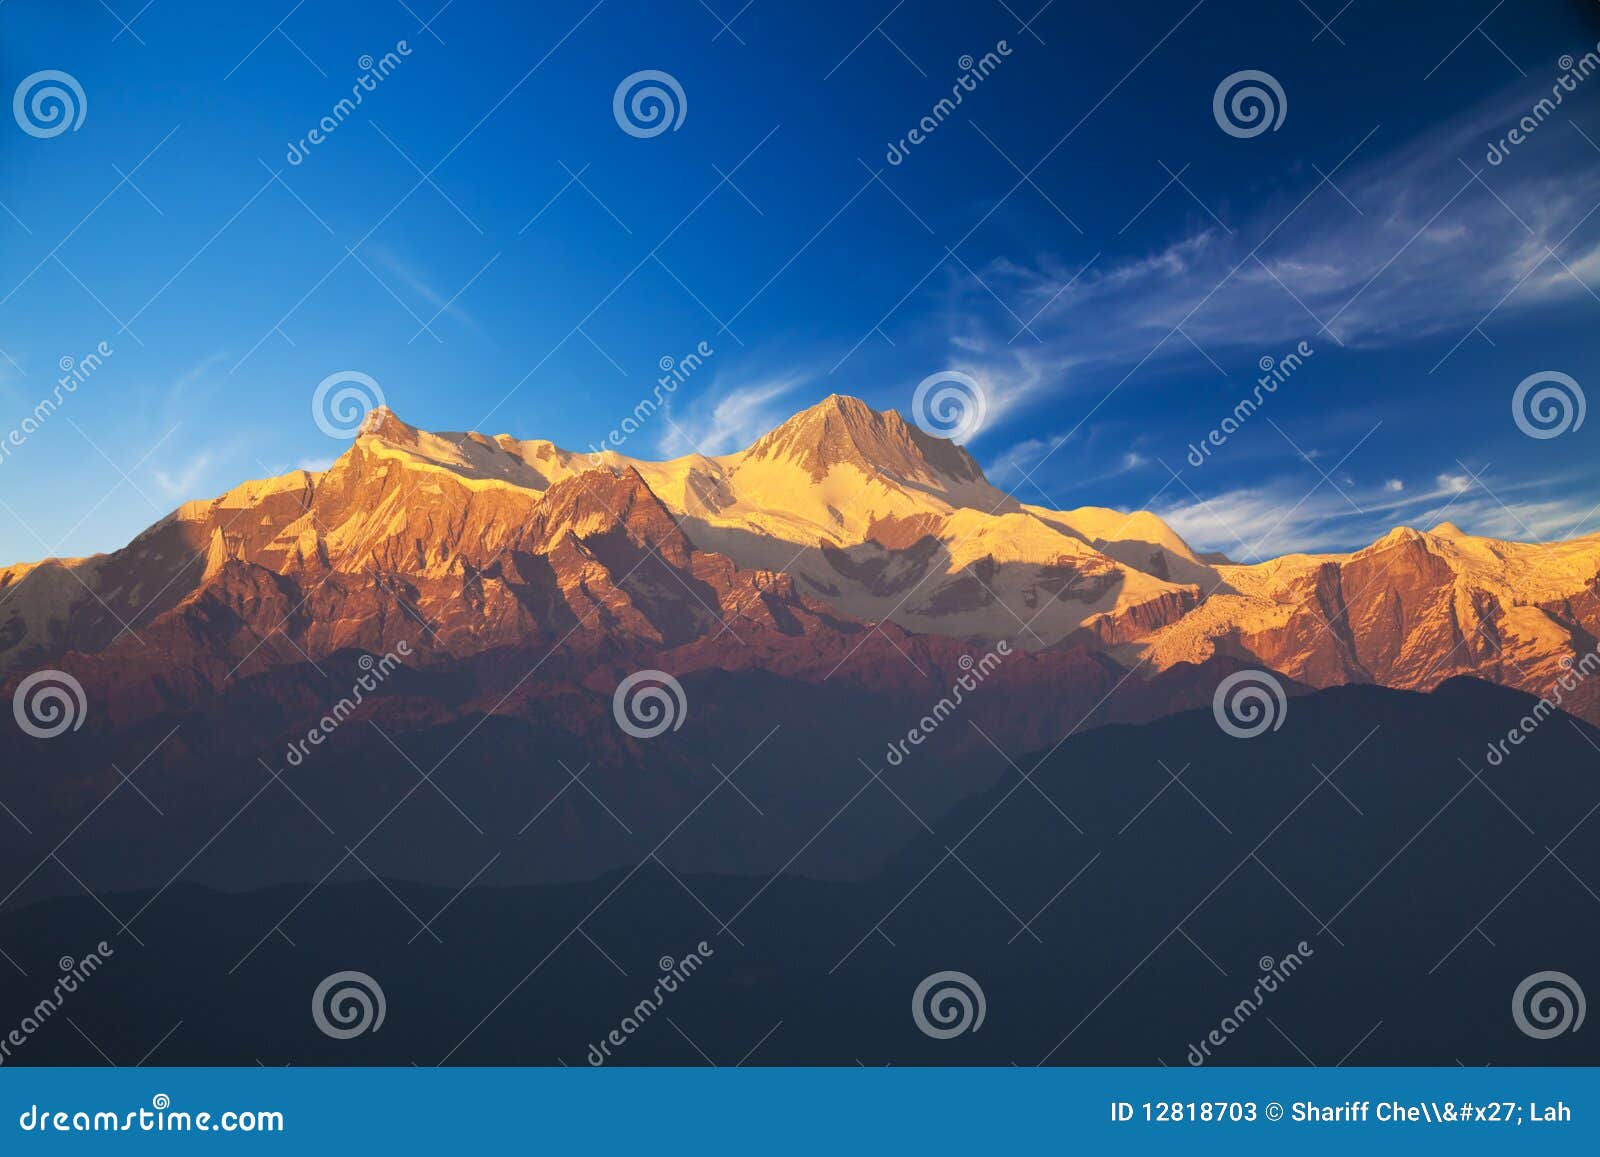 mounts annapurna ii and iv at dusk, nepal